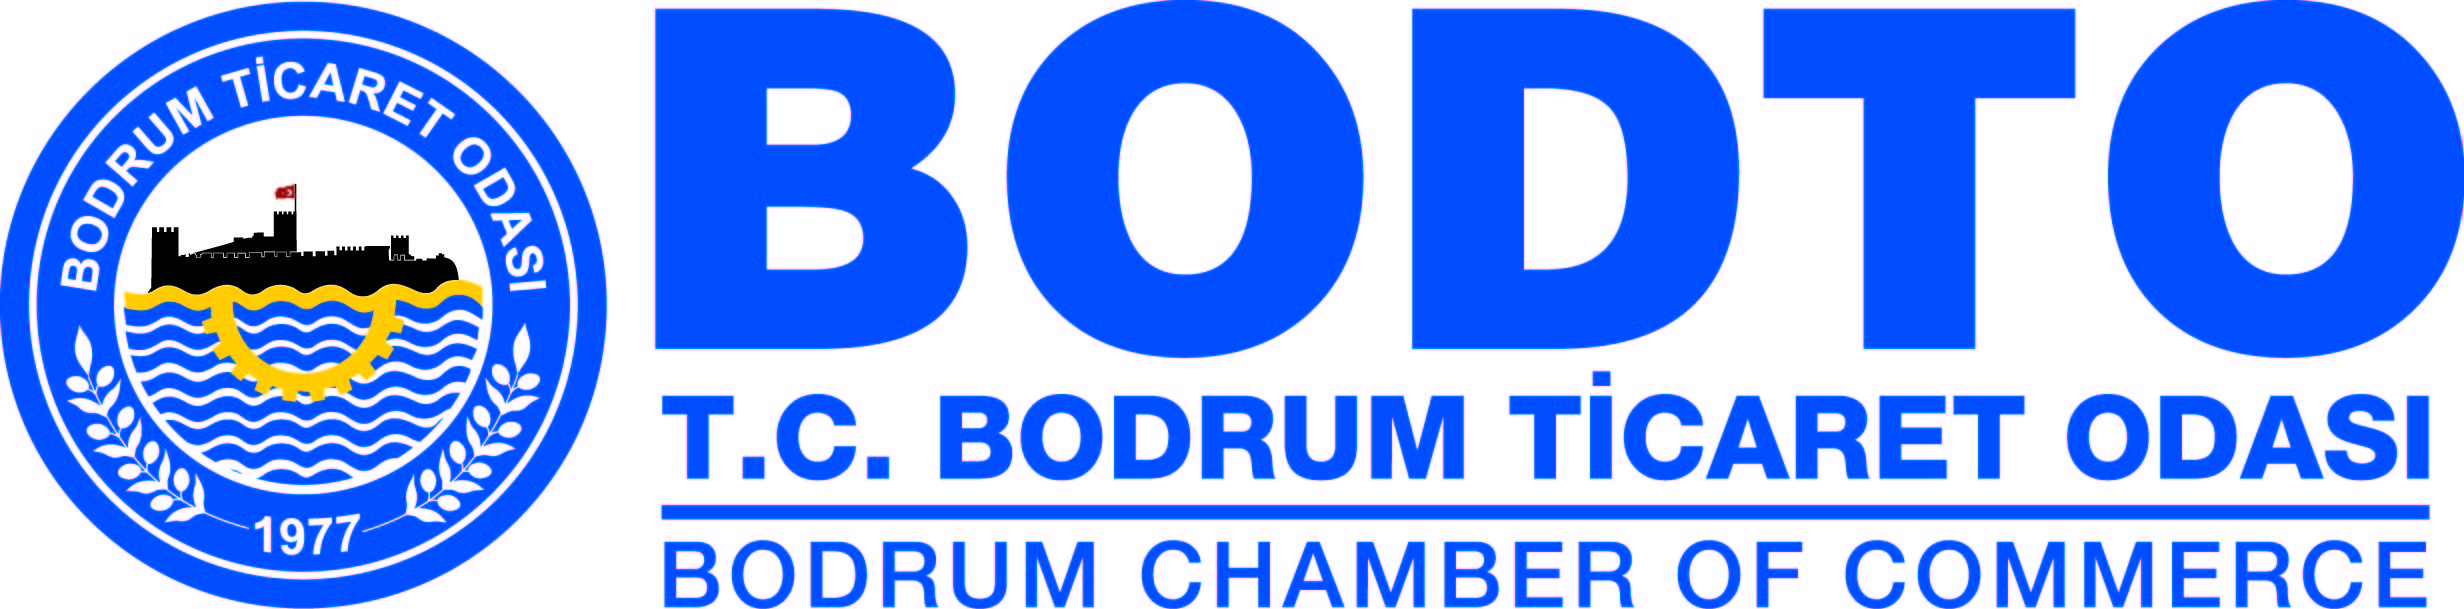 Bodrum Ticaret Odası Logo photo - 1